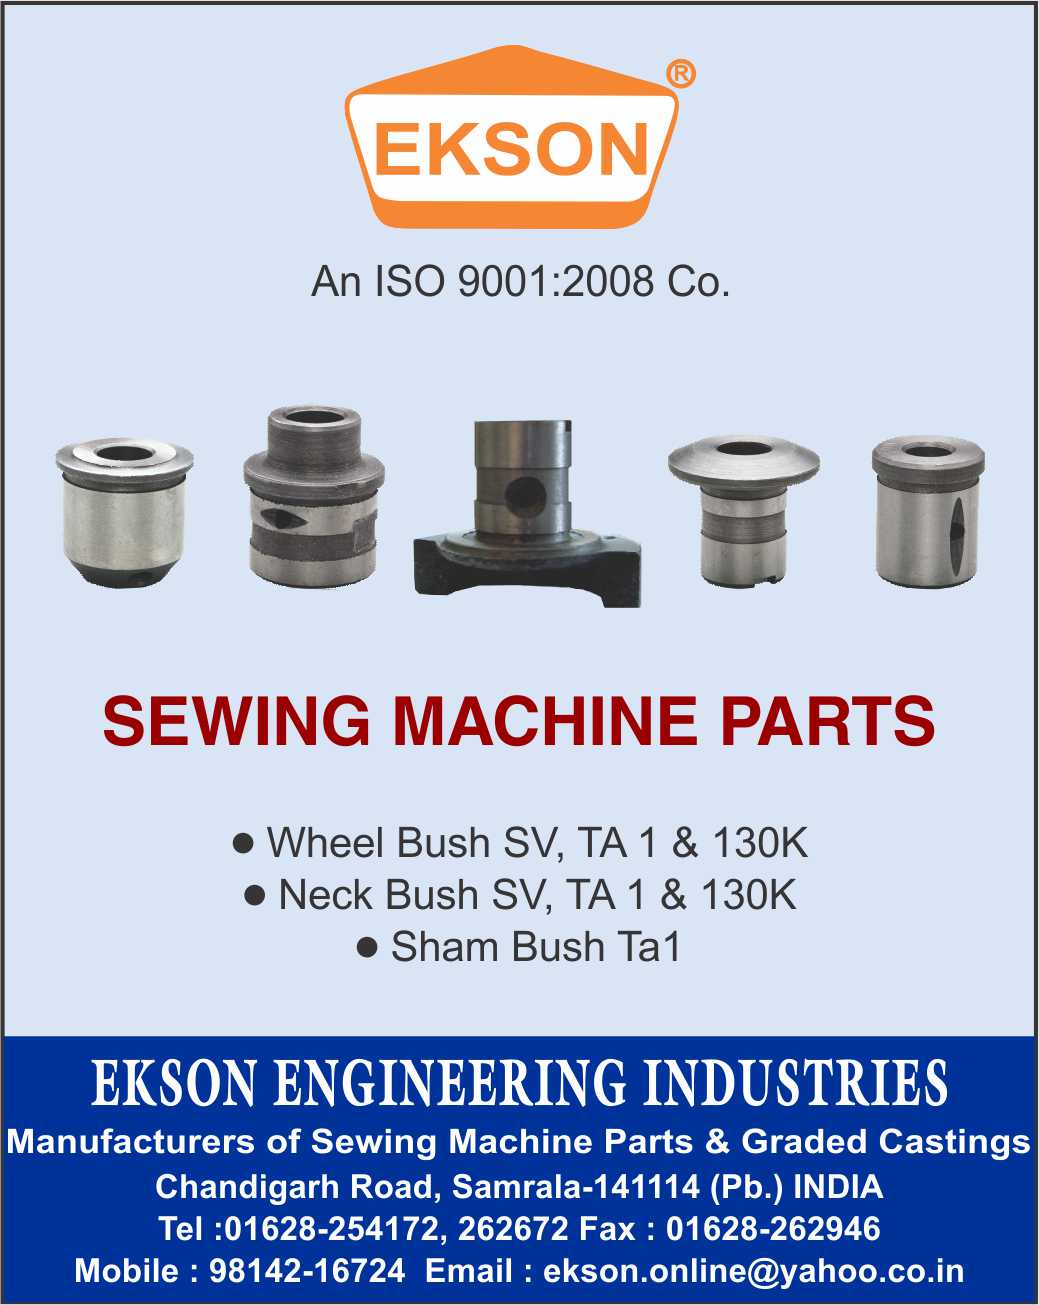 Ekson Engg. Industries